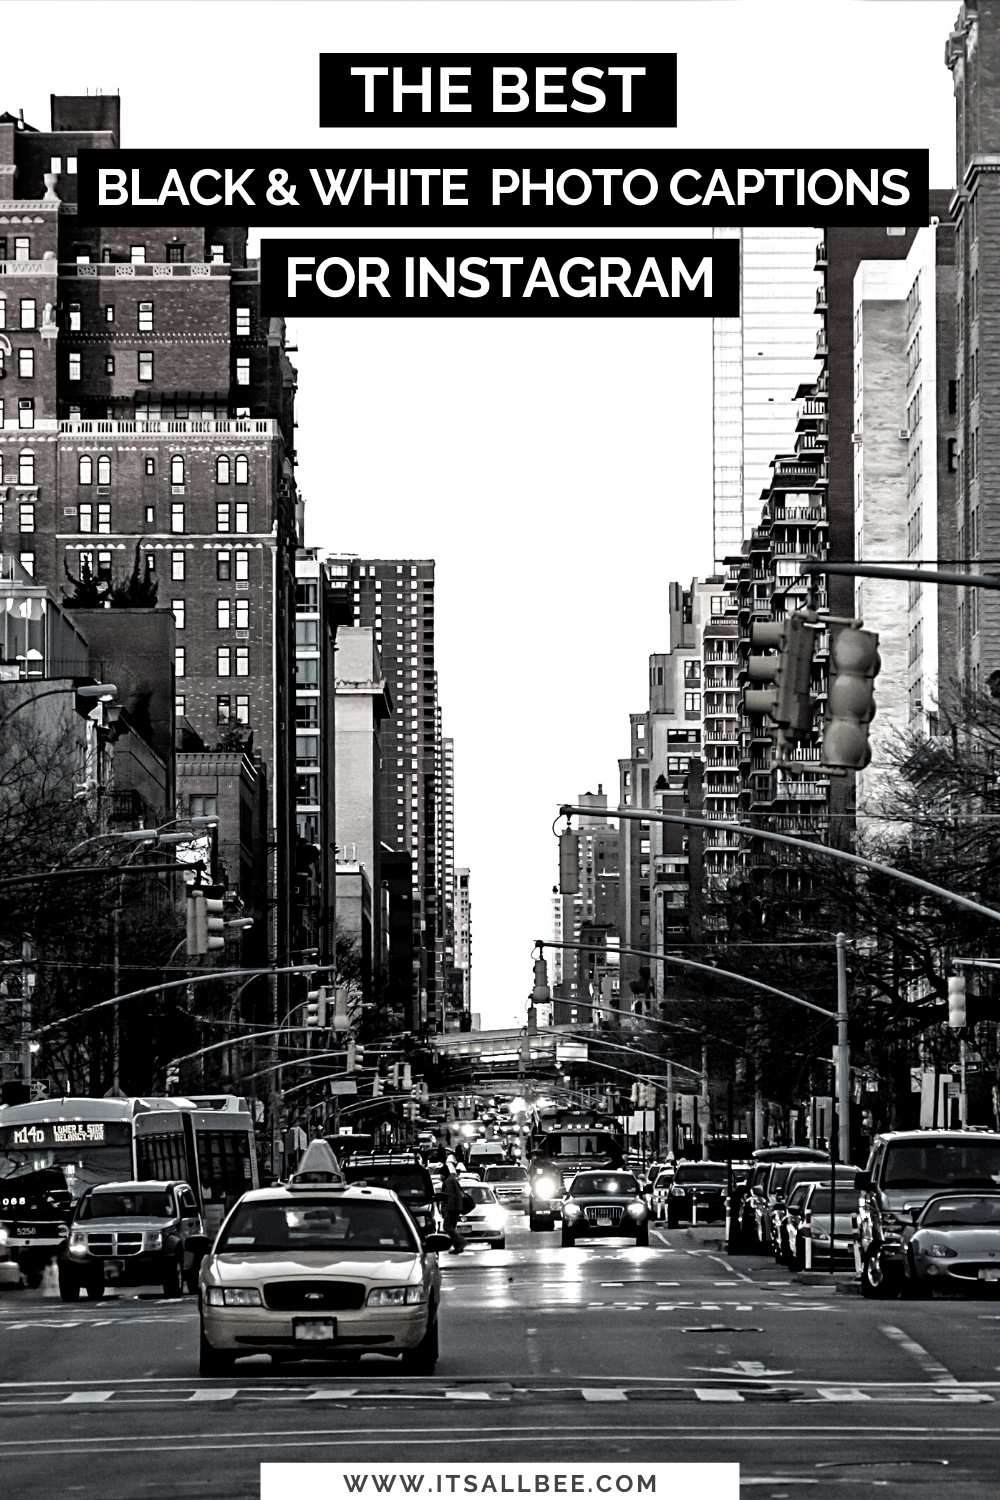 Best Black And White Selfie Captions For Instagram